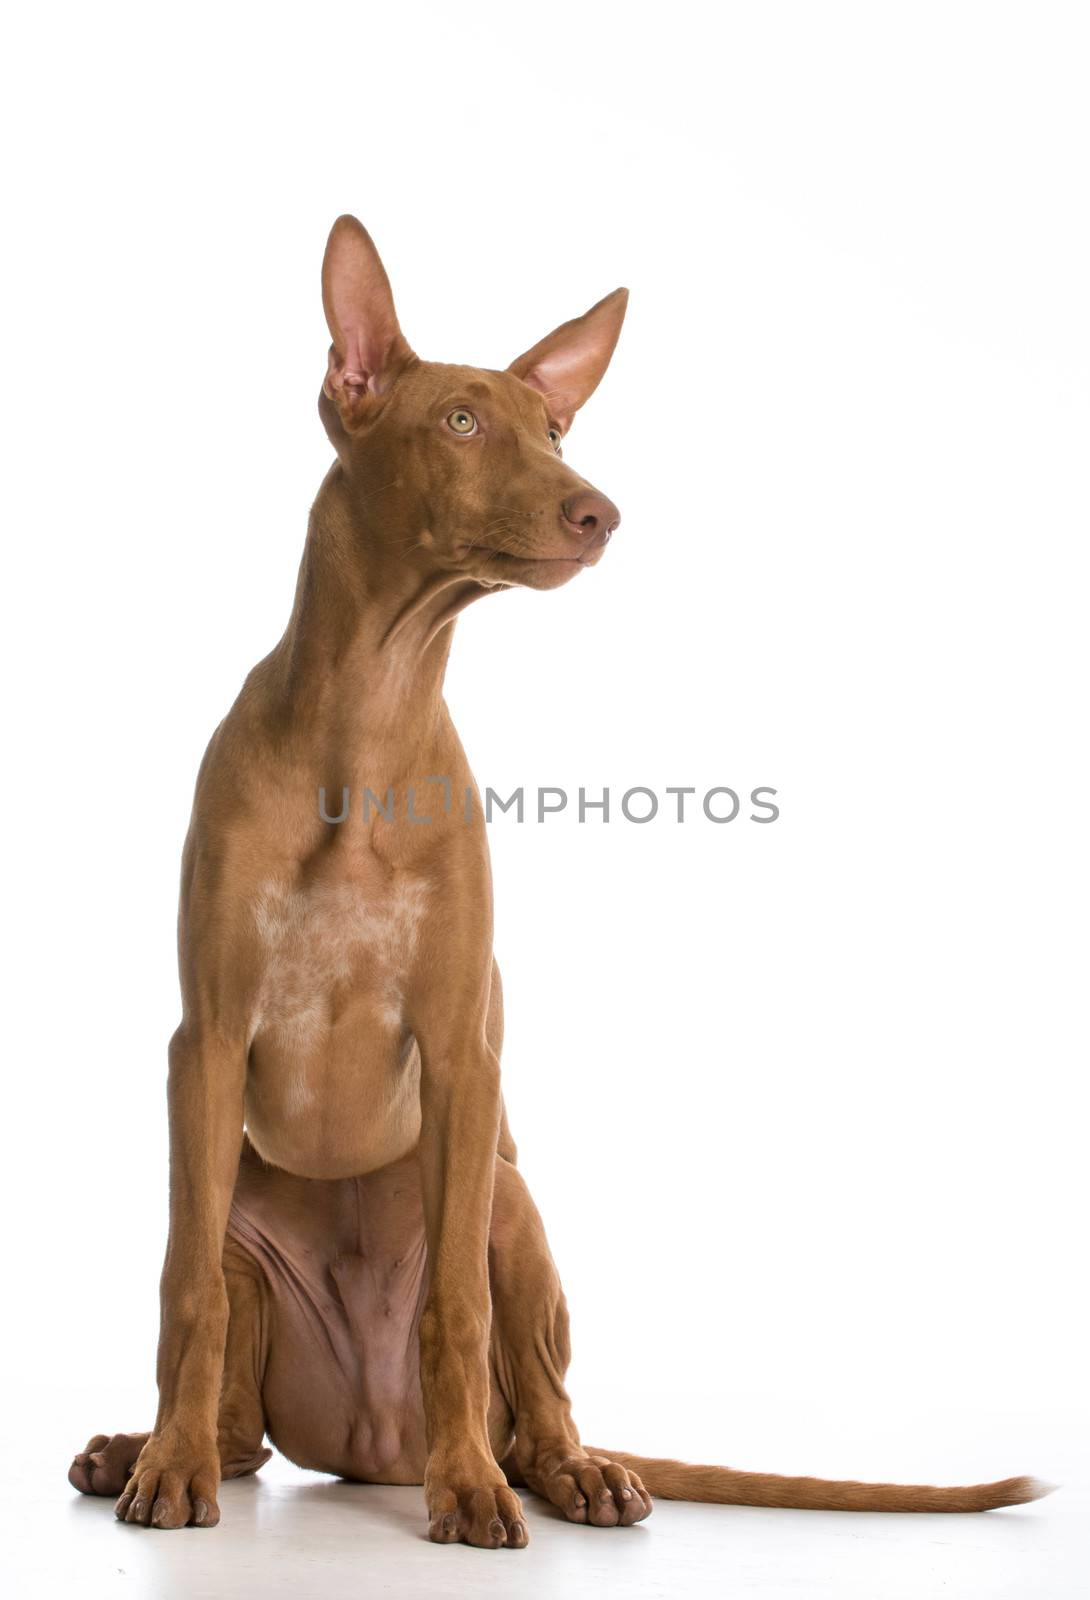 pharaoh hound portrait looking up on white background